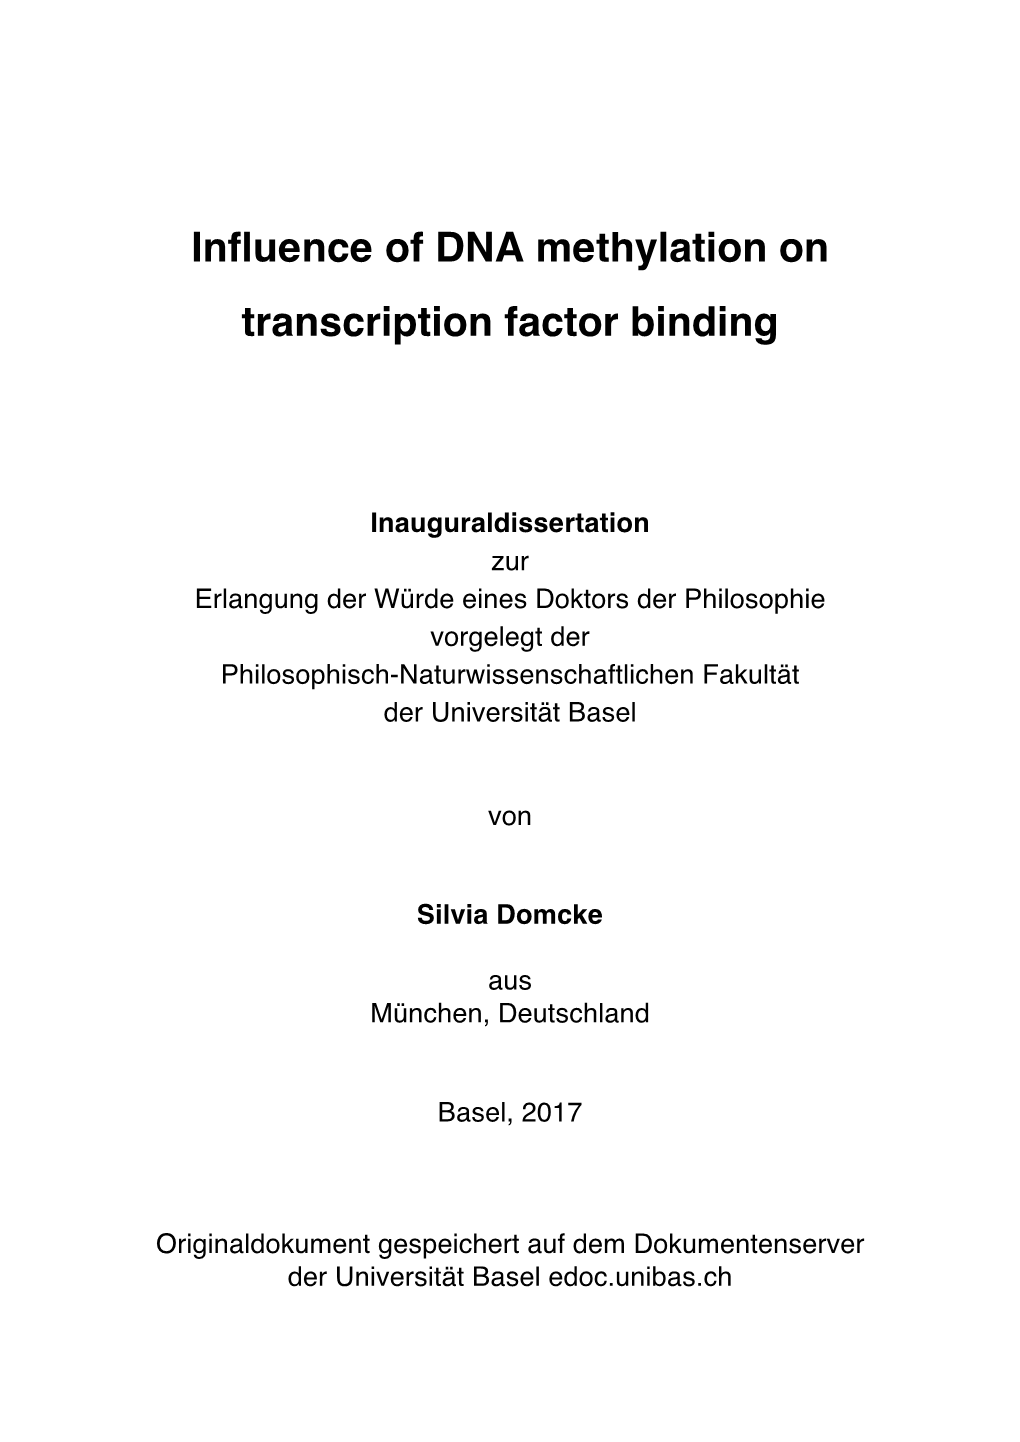 Influence of DNA Methylation on Transcription Factor Binding